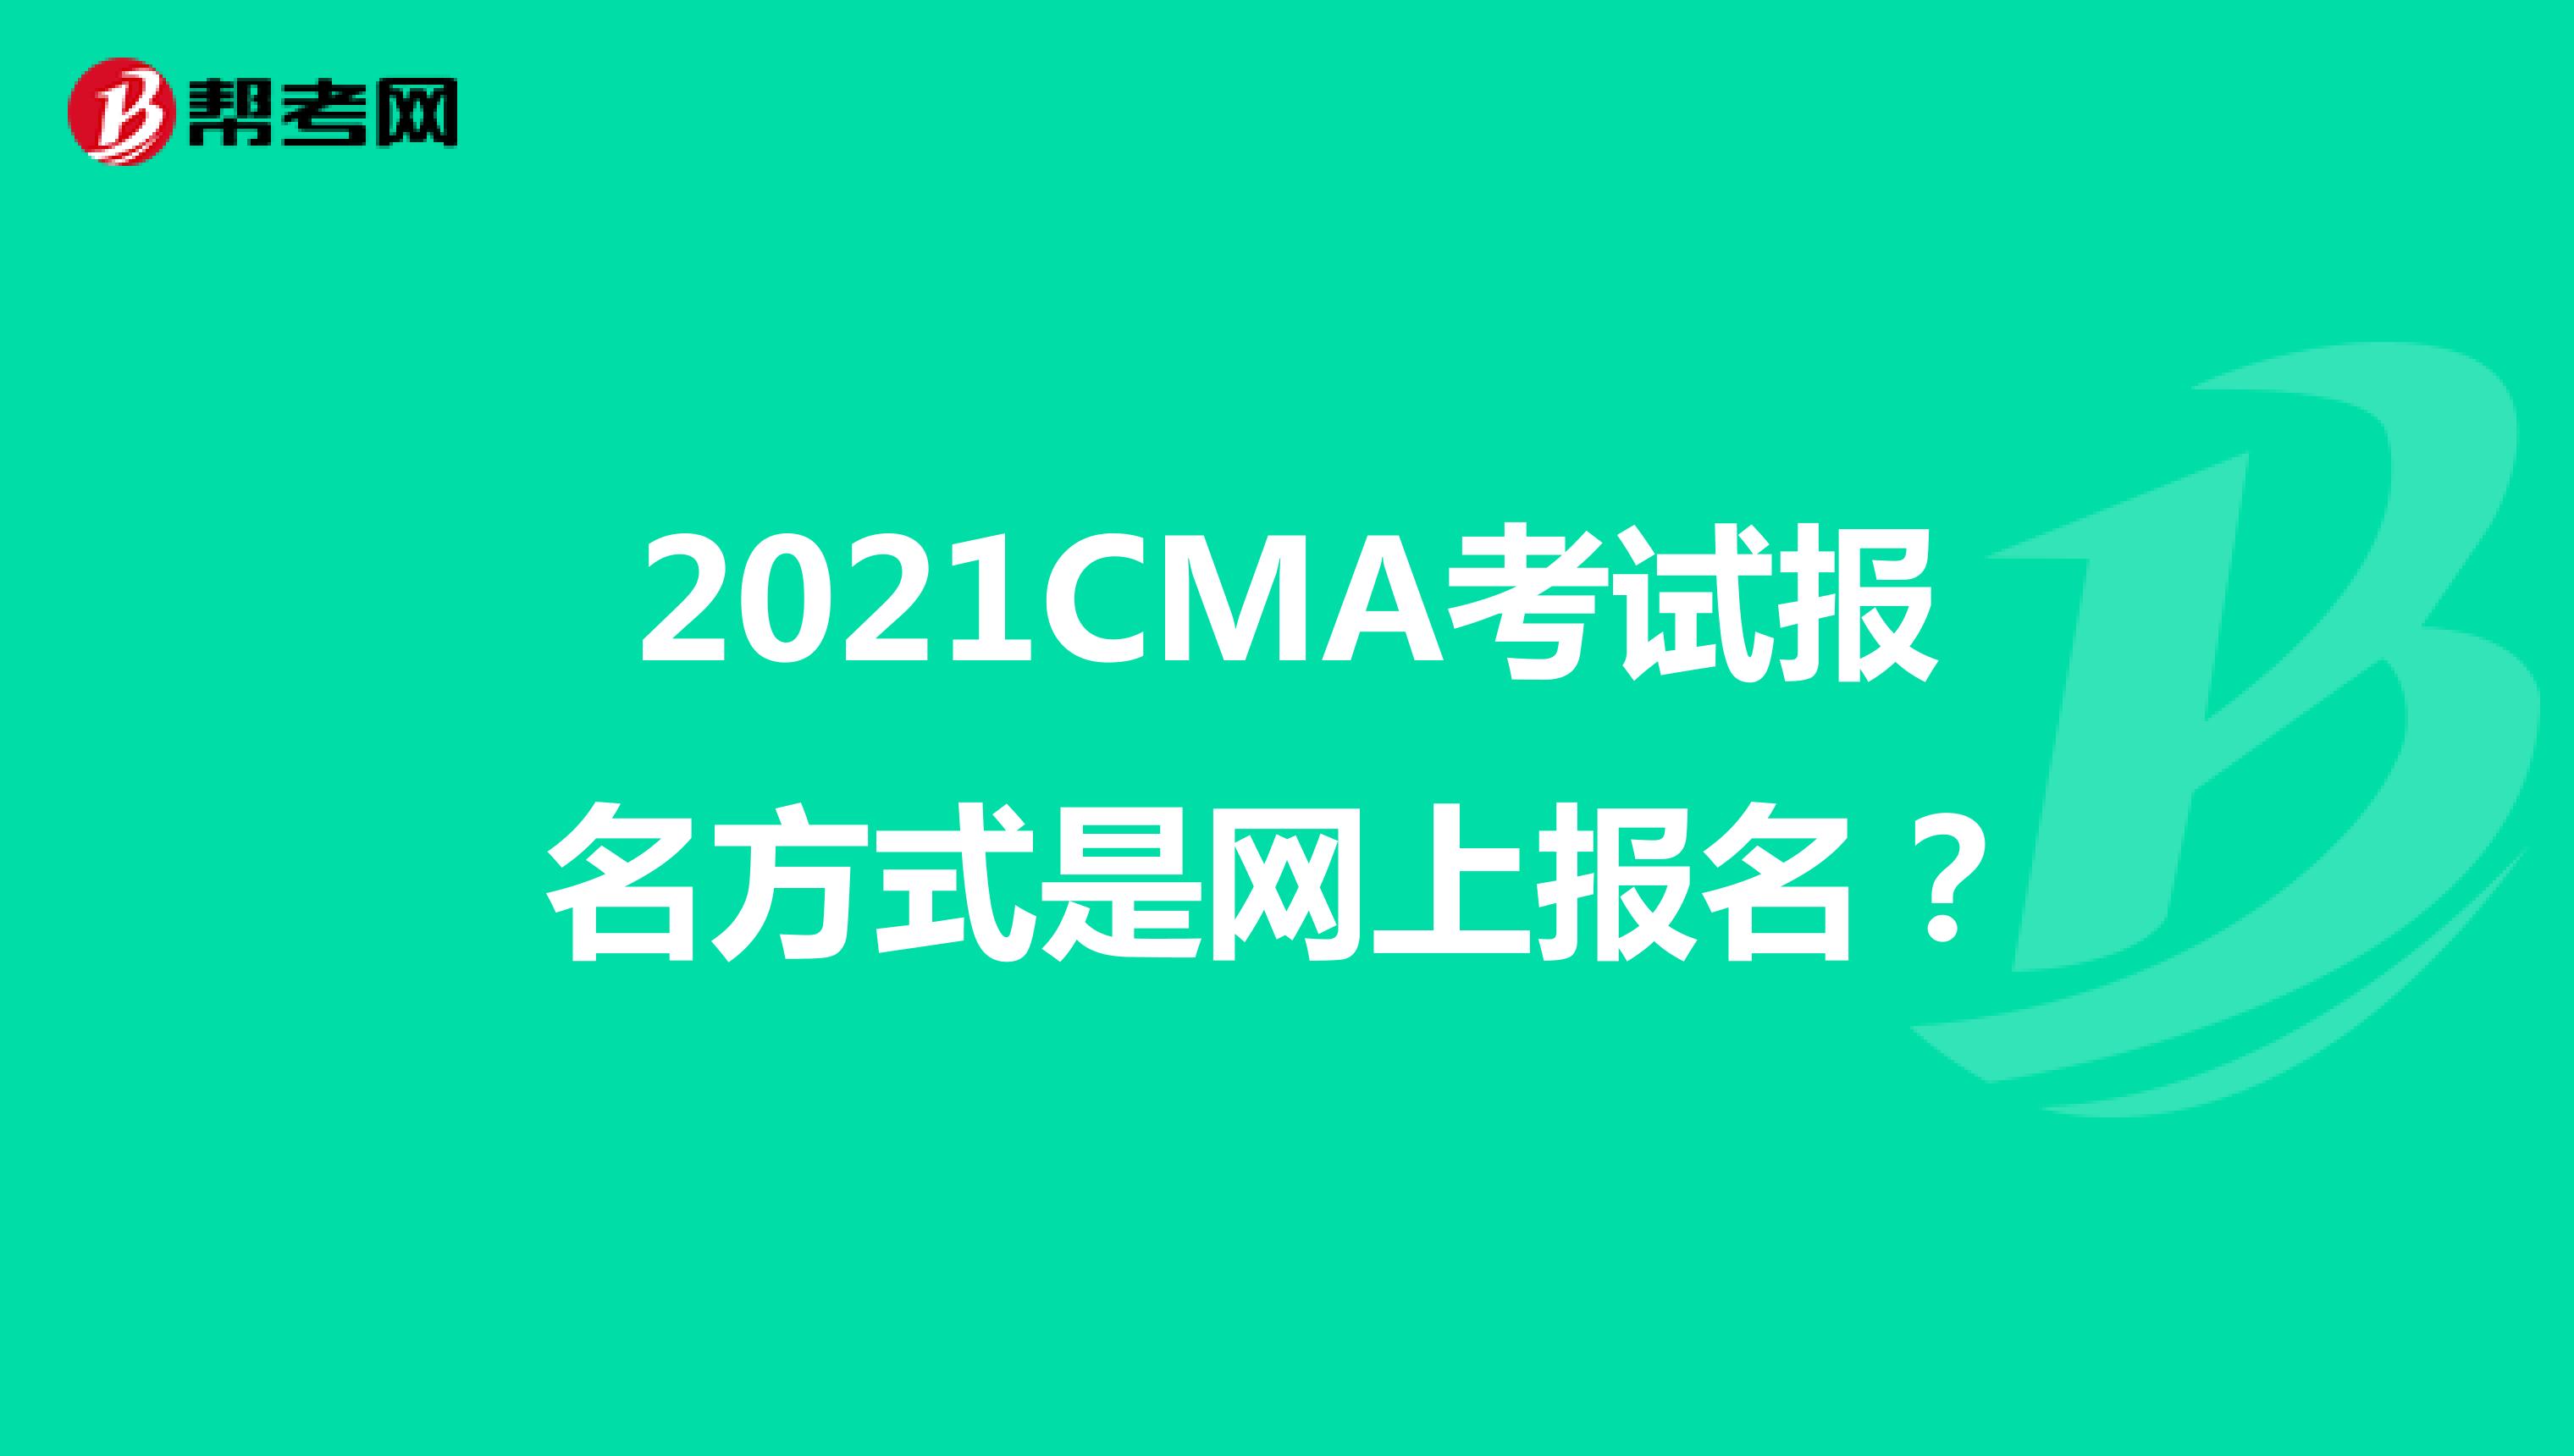 2021CMA考试报名方式是网上报名？